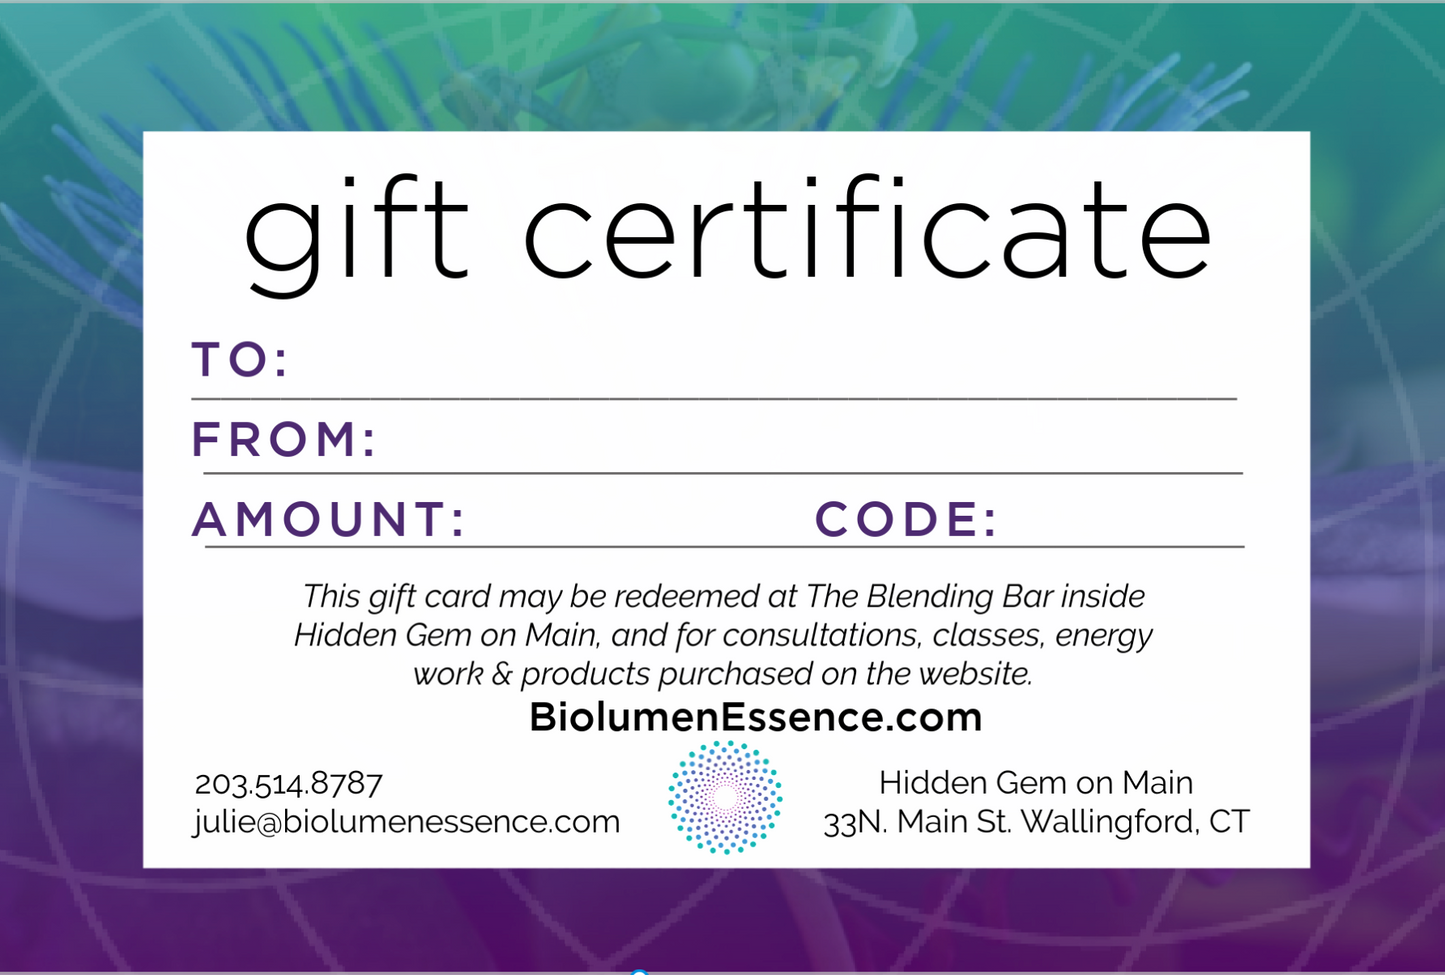 biolumenessence gift certificate